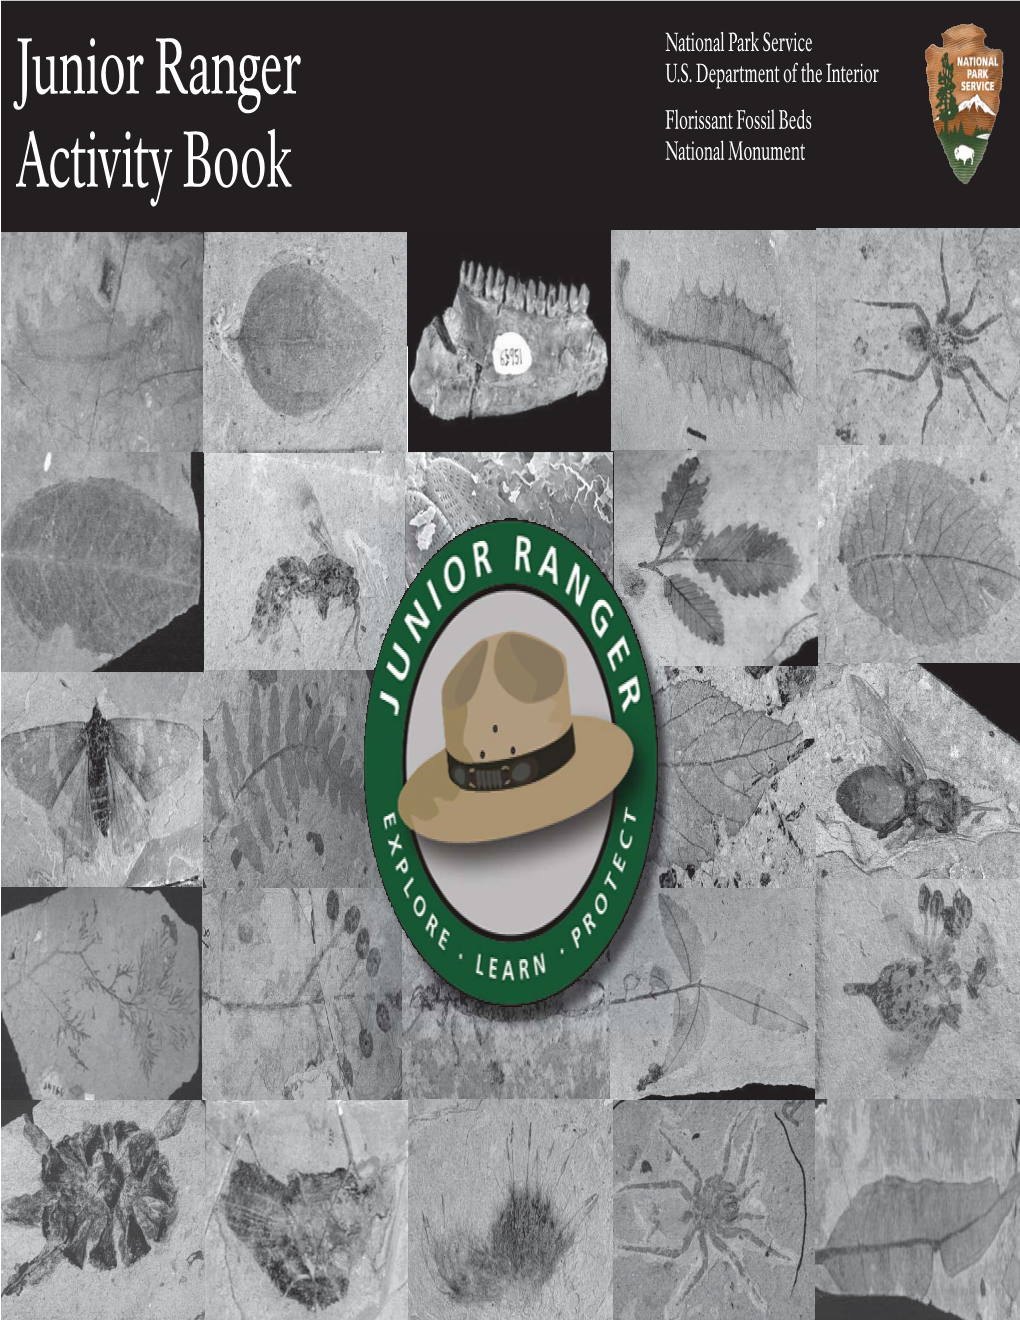 Junior Ranger Activity Book, Florissant Fossil Beds National Monument